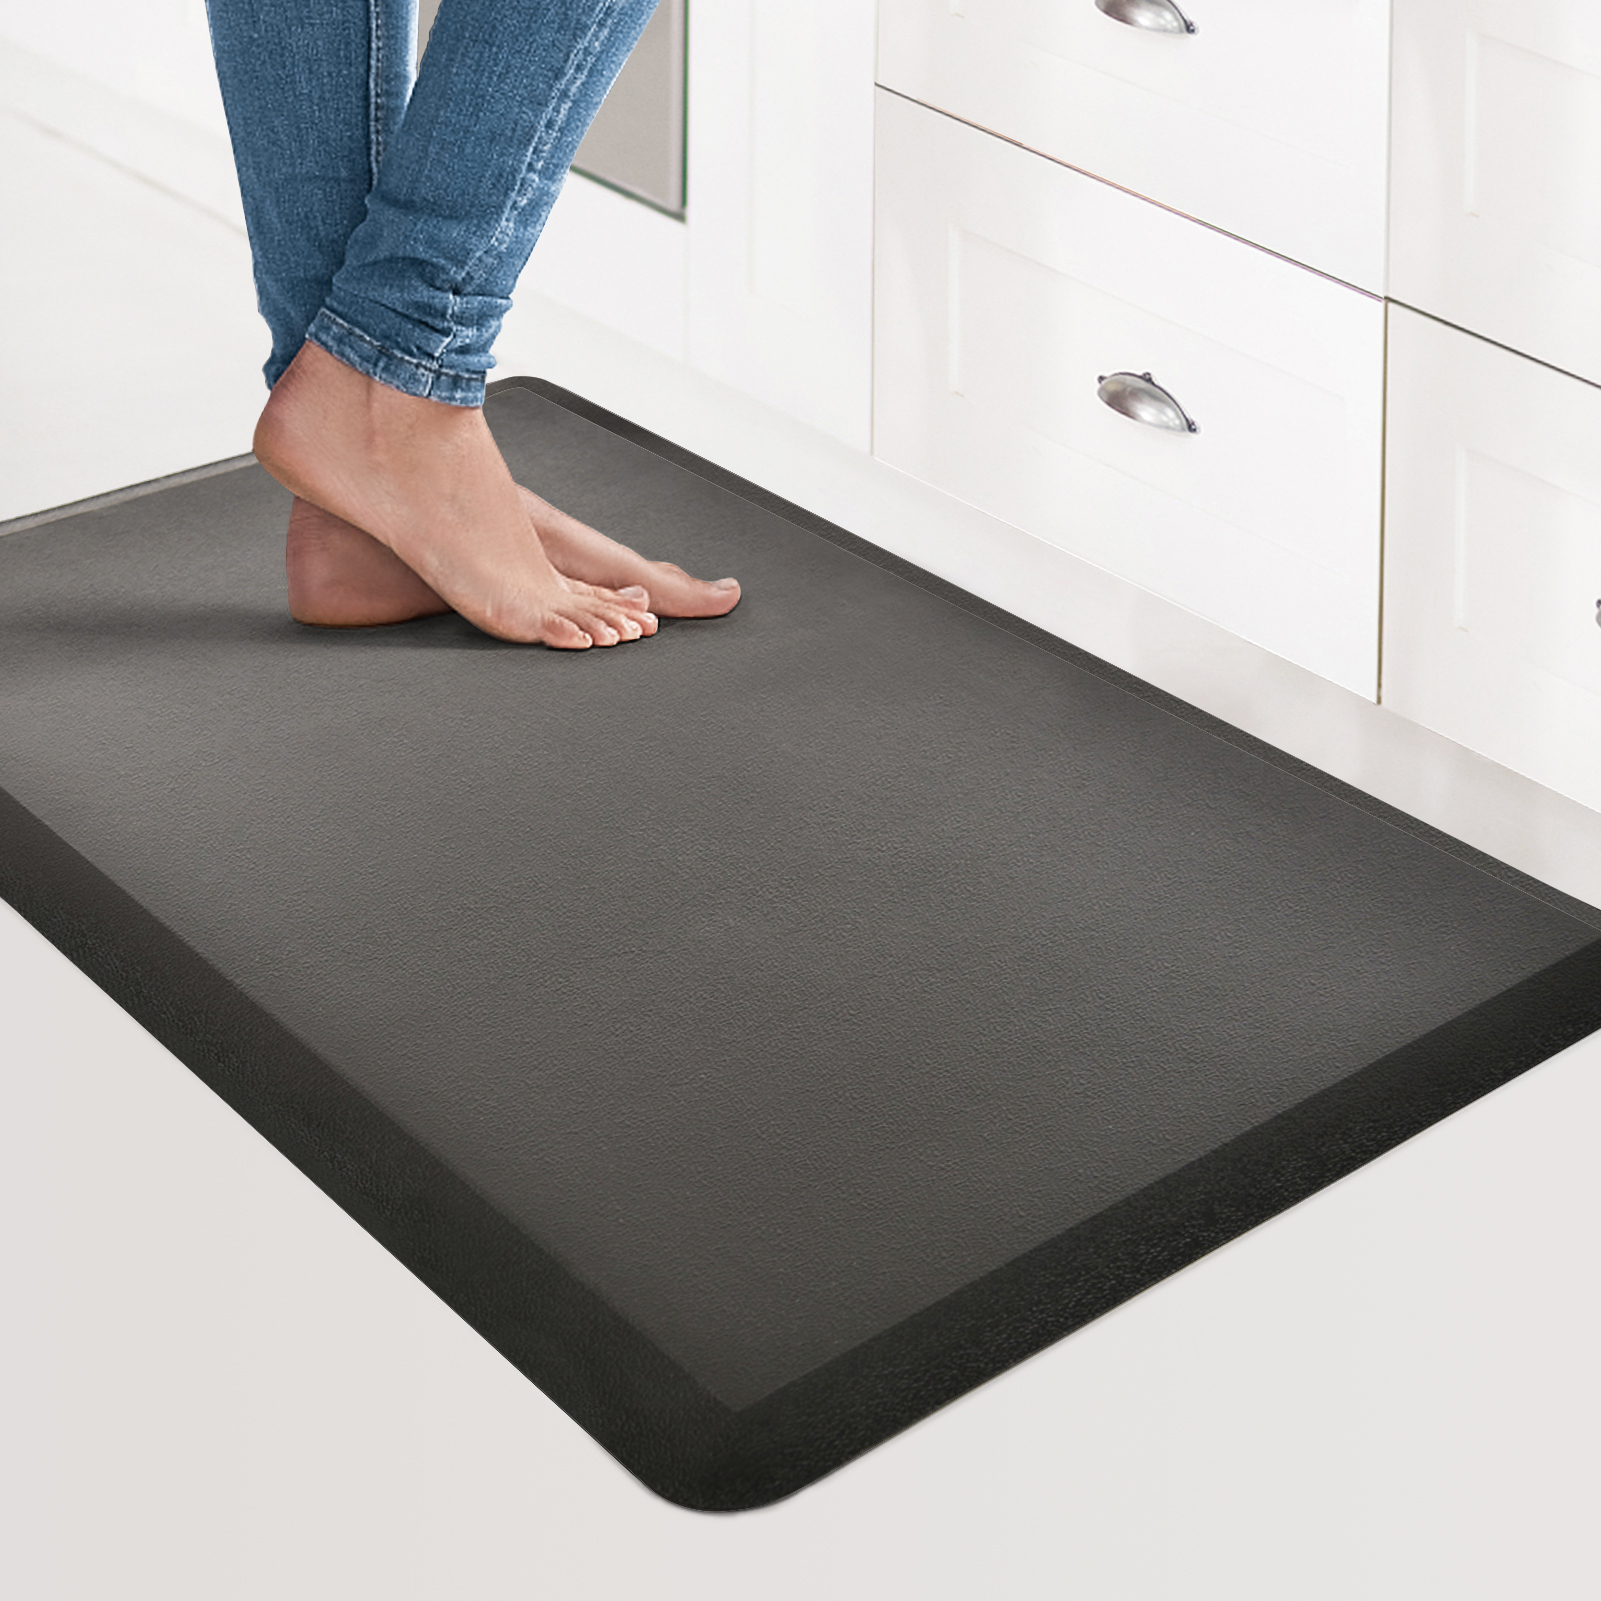 Art3d Anti Fatigue Mat - 12 inch Cushioned Kitchen Mat - Non Slip Foam Comfort Cushion for Standing Desk, Office or Garage Floor 173x28, Black